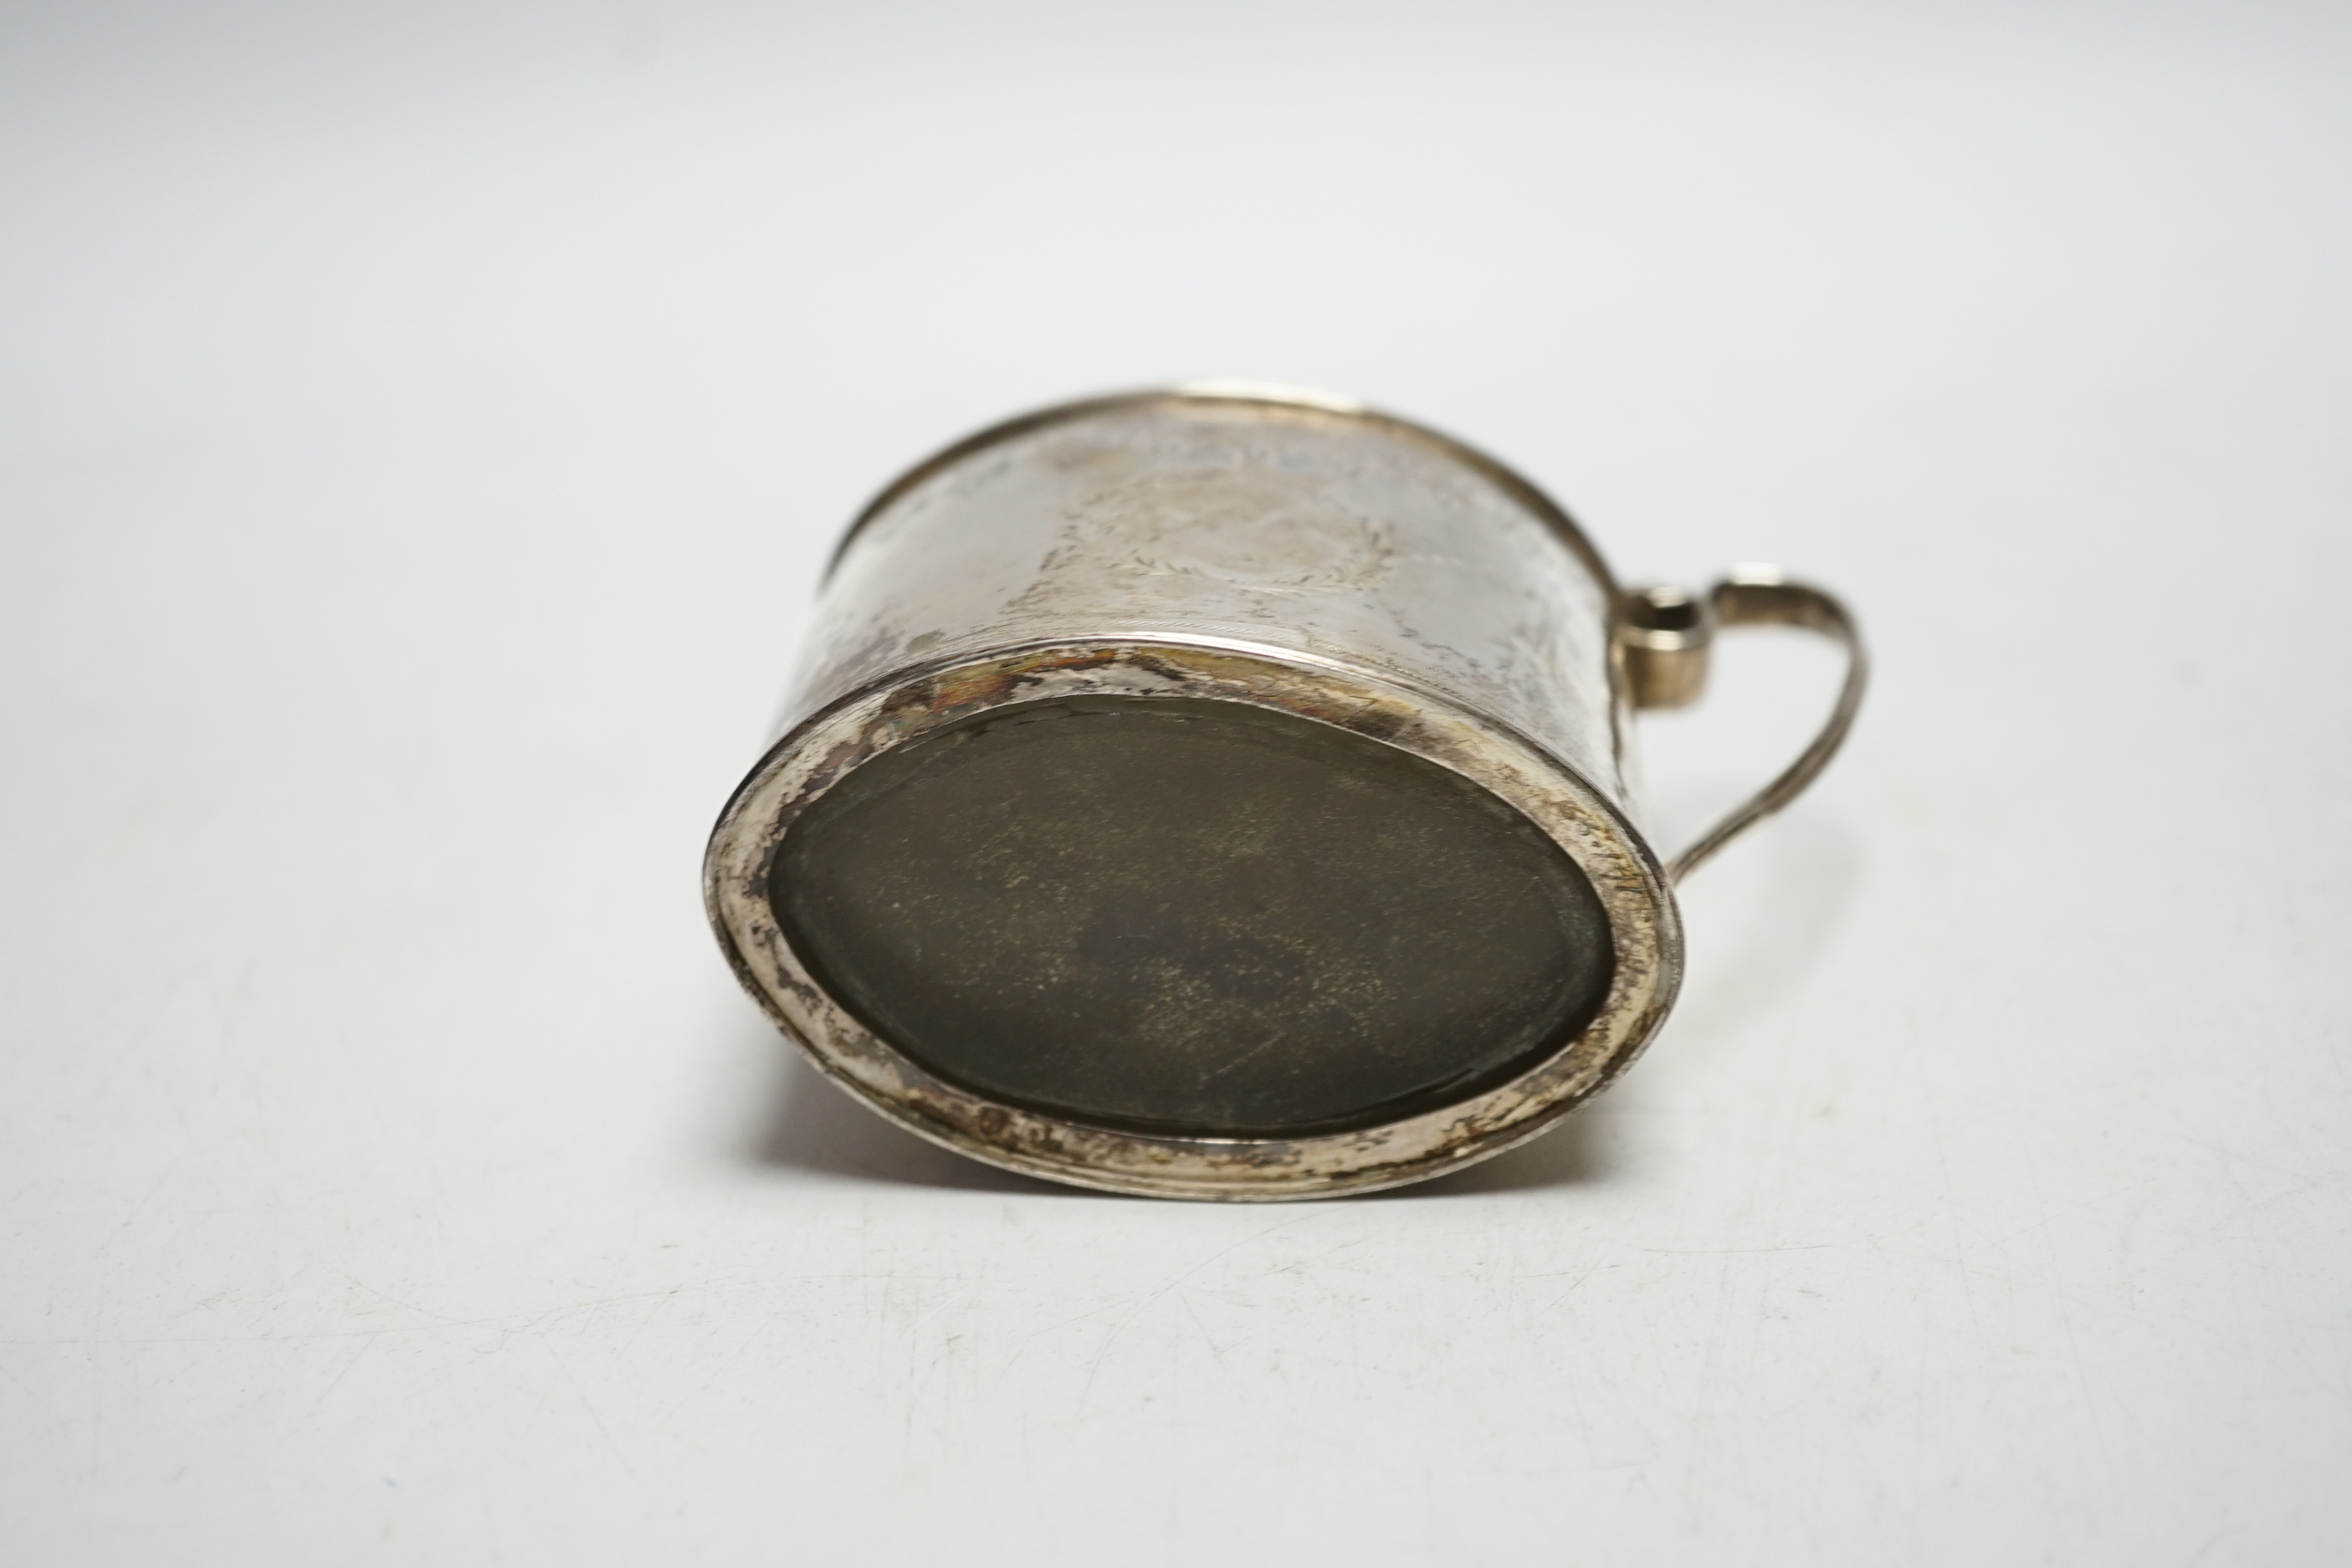 A George III silver oval mustard pot, John Gold, London, 1798, length 77mm.